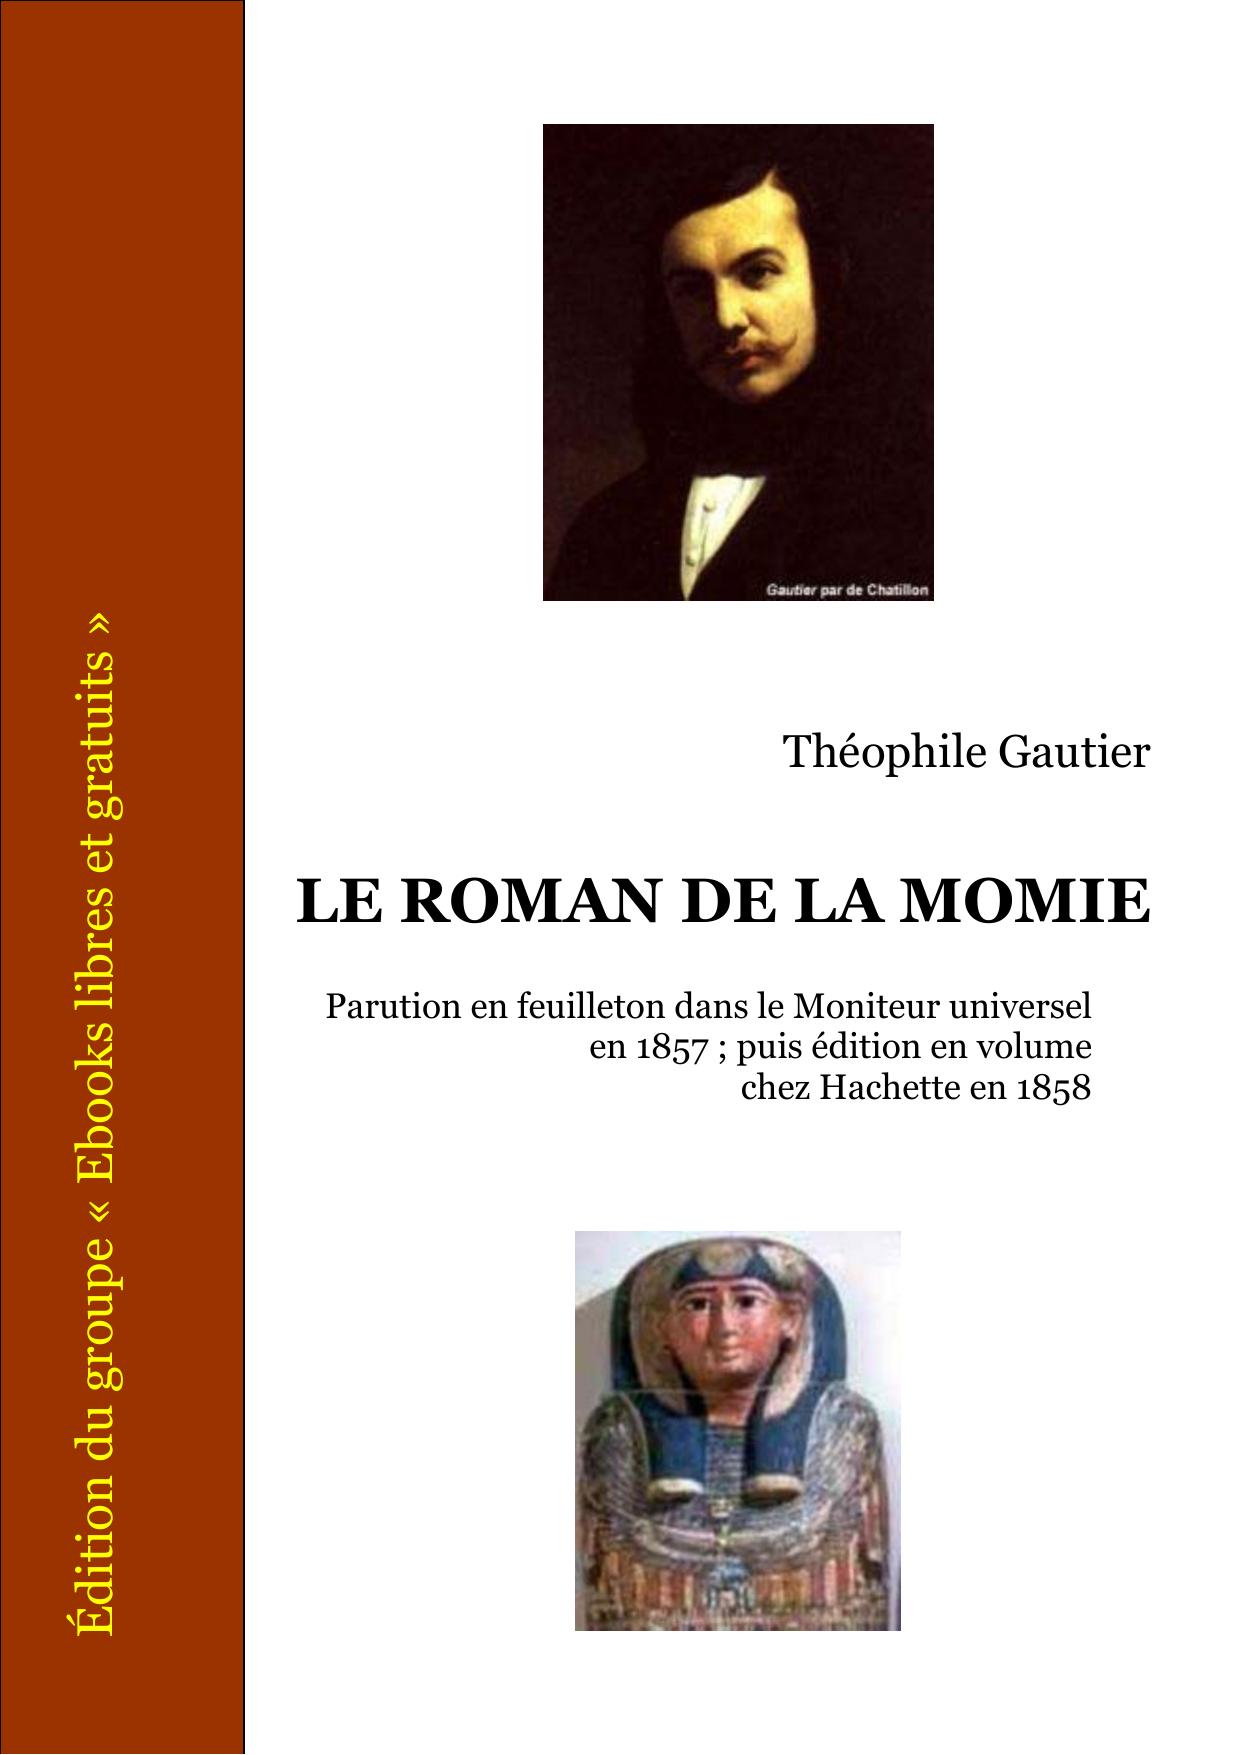 Microsoft Word - gautier_roman_de_la_momie_source.doc